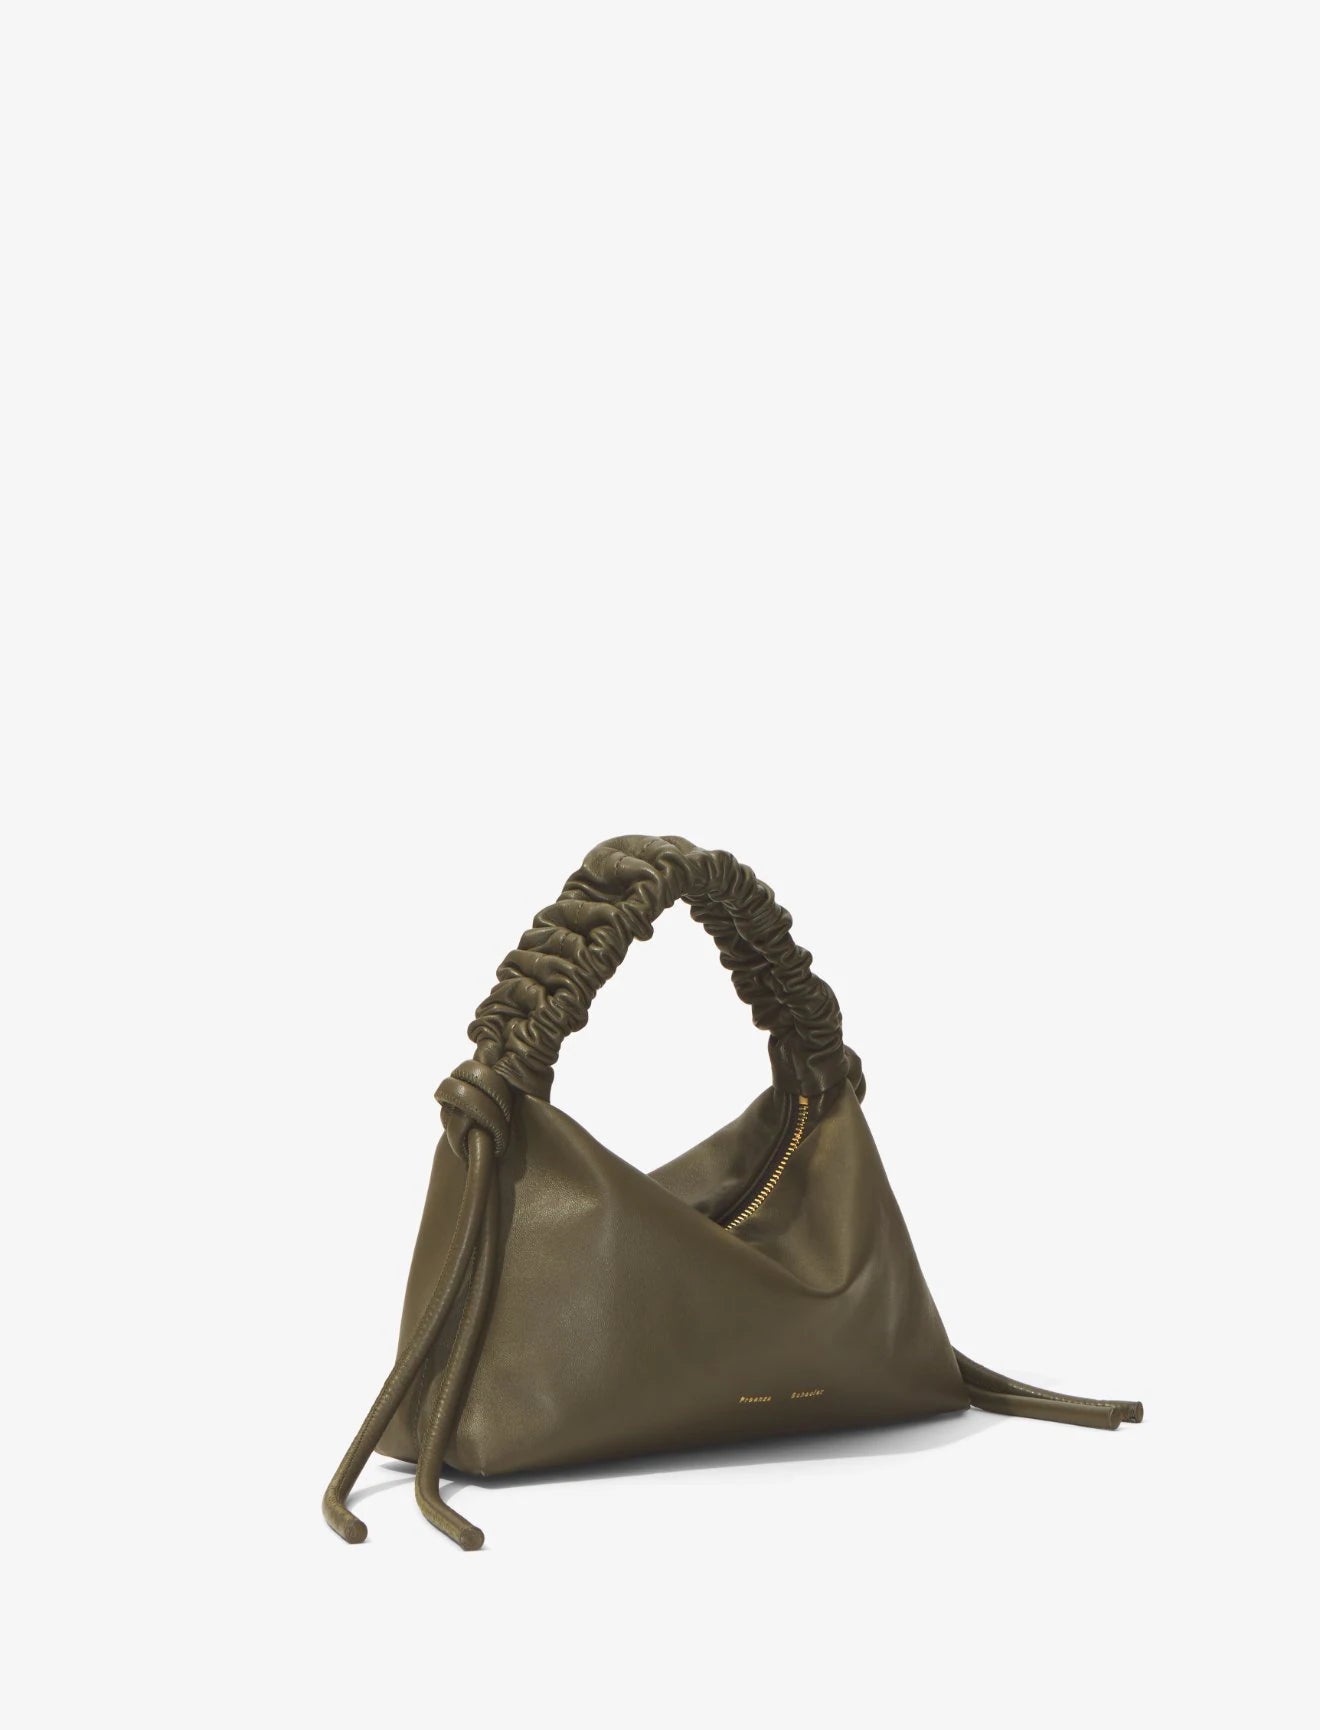 Mini Drawstring Bag - More Colors Available